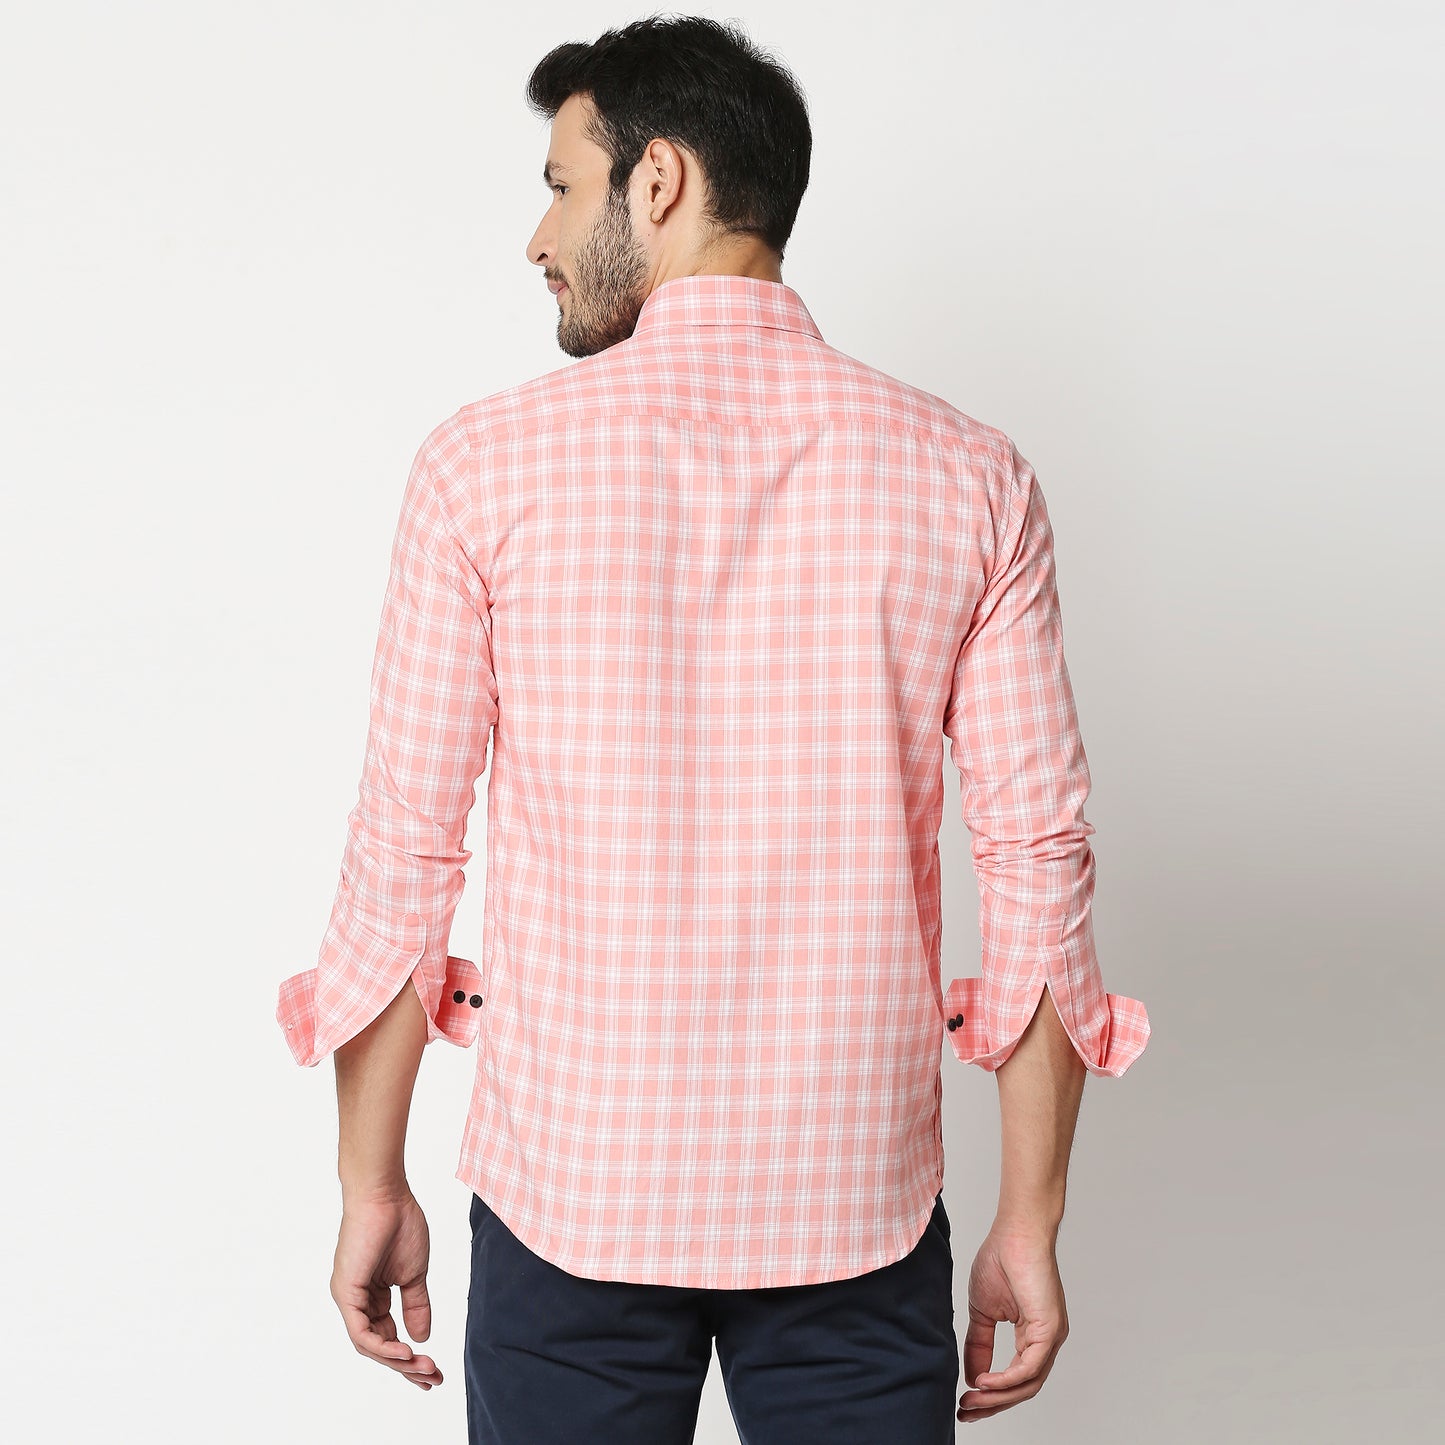 Fostino Pink  Checks  Full Sleeves Shirt - Fostino - Shirts & Tops